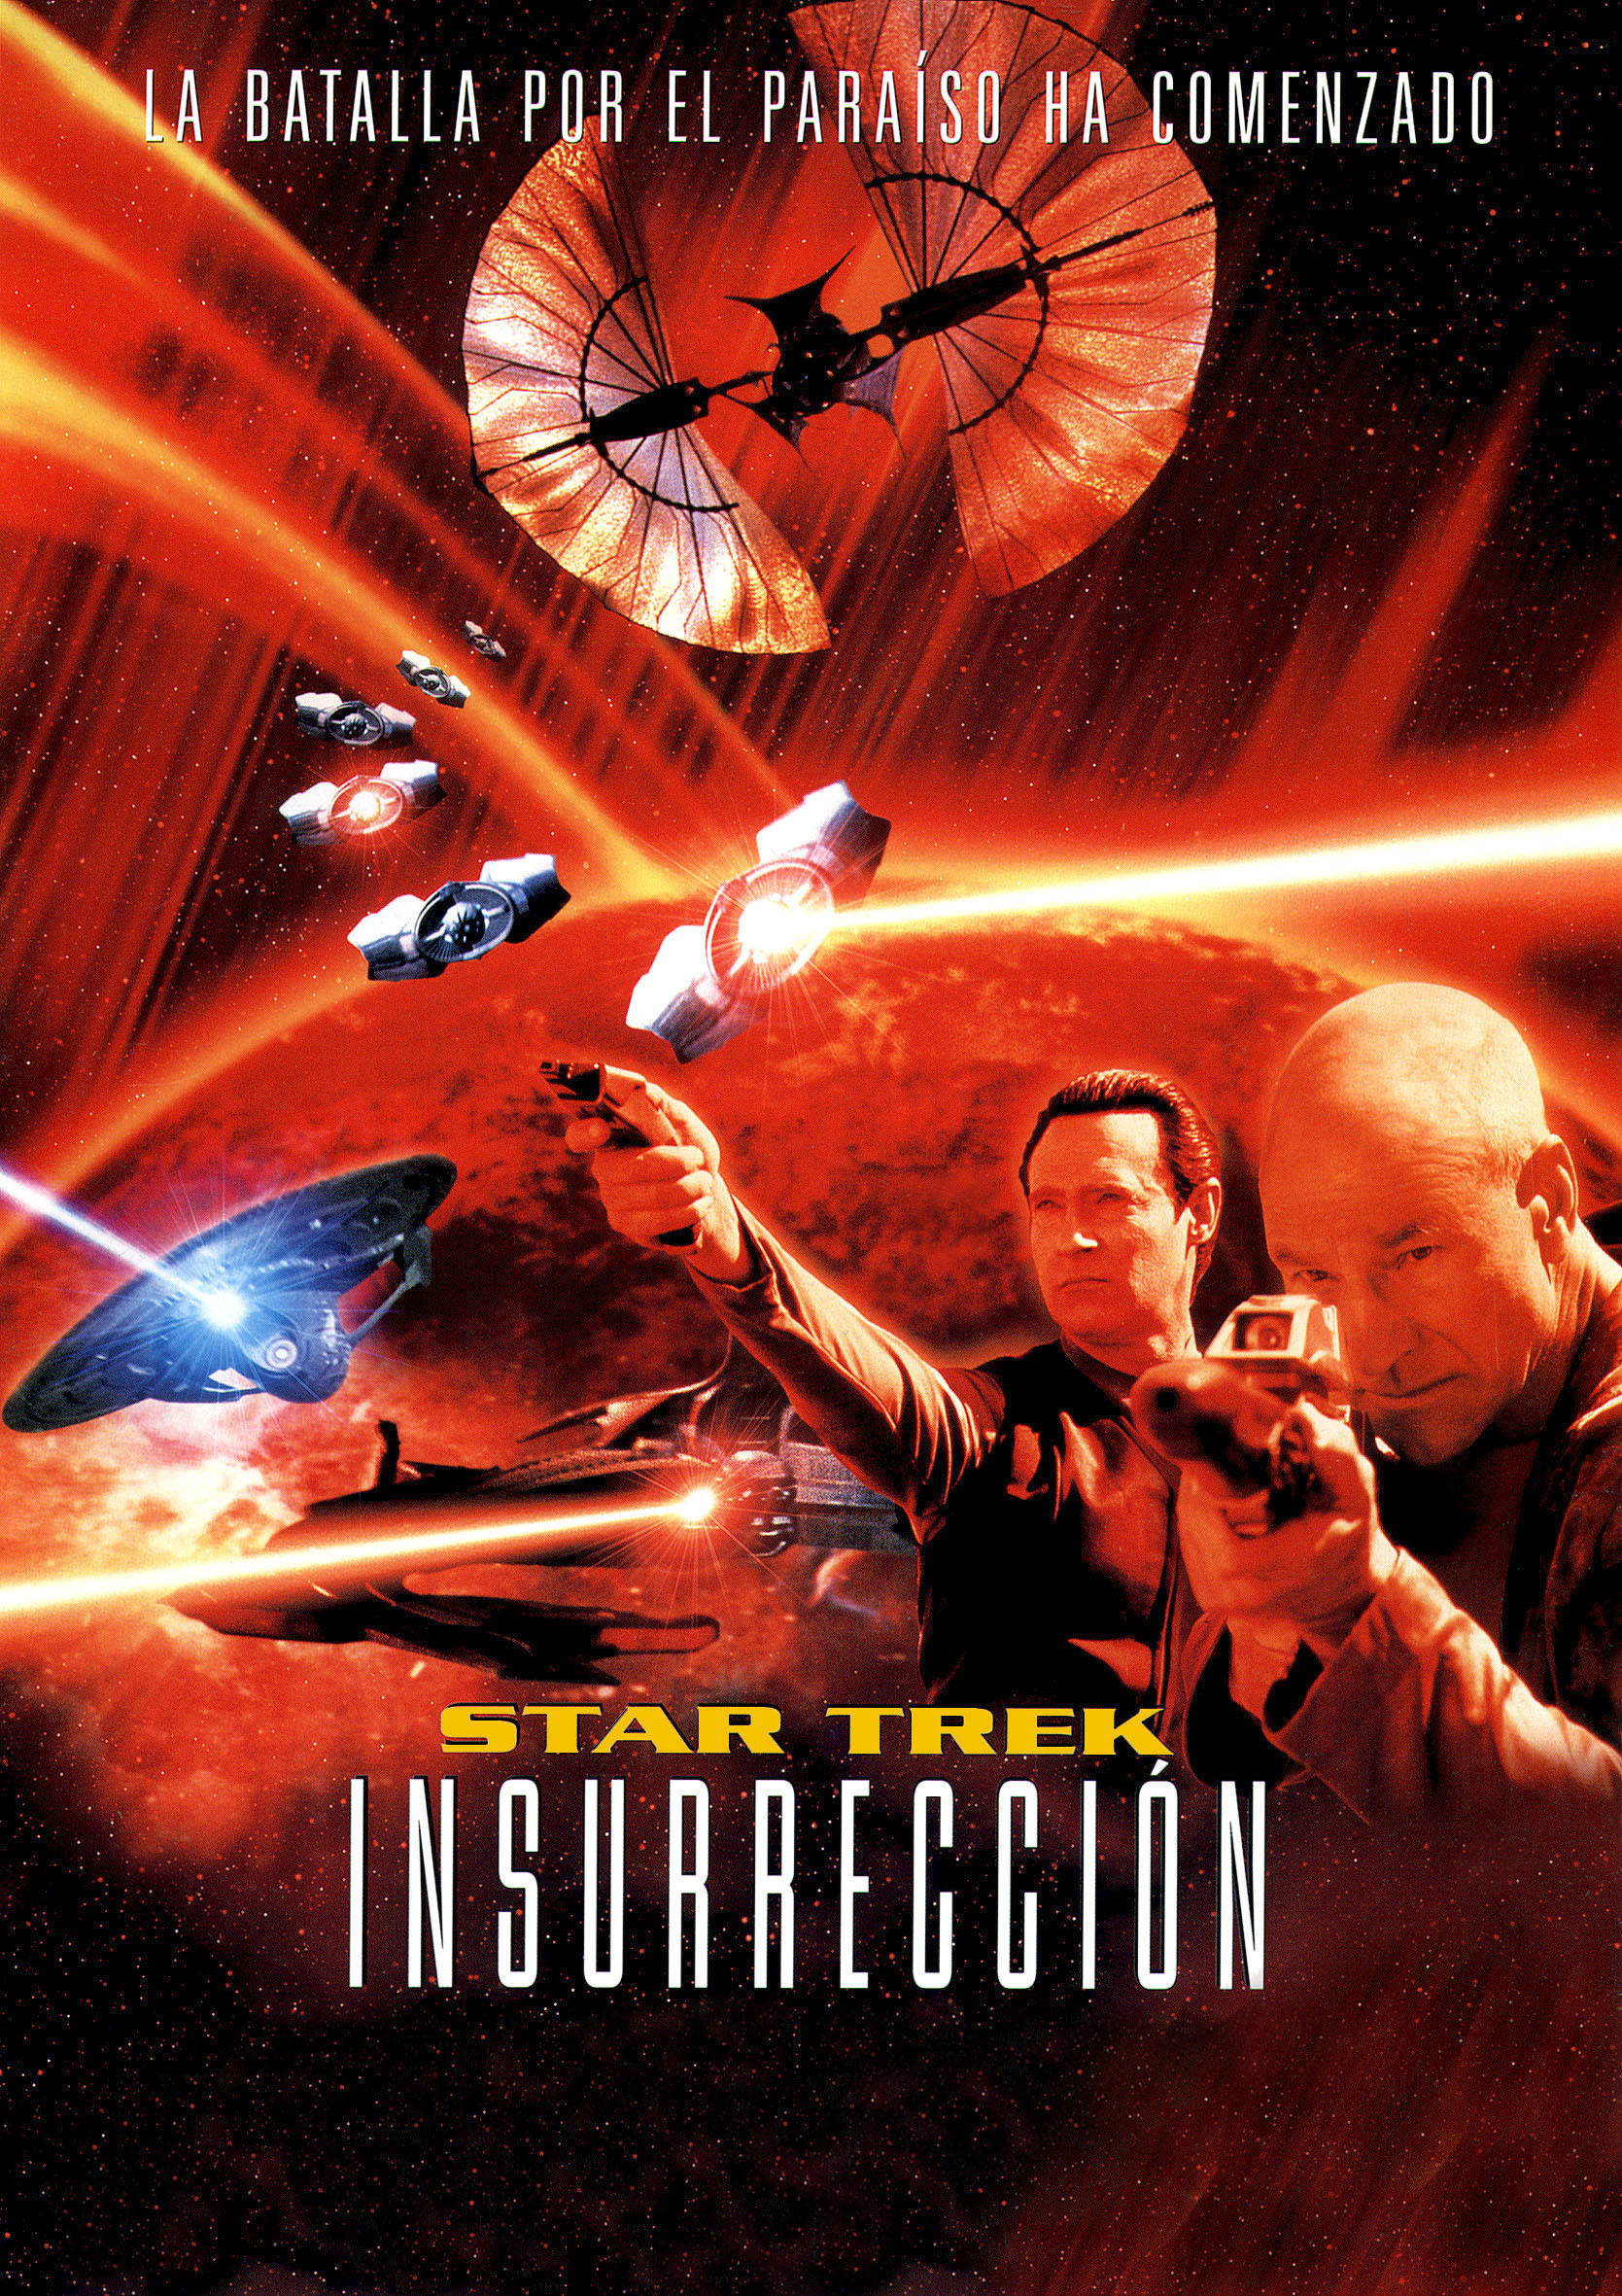 Star Trek: Insurrection HD wallpapers, Desktop wallpaper - most viewed